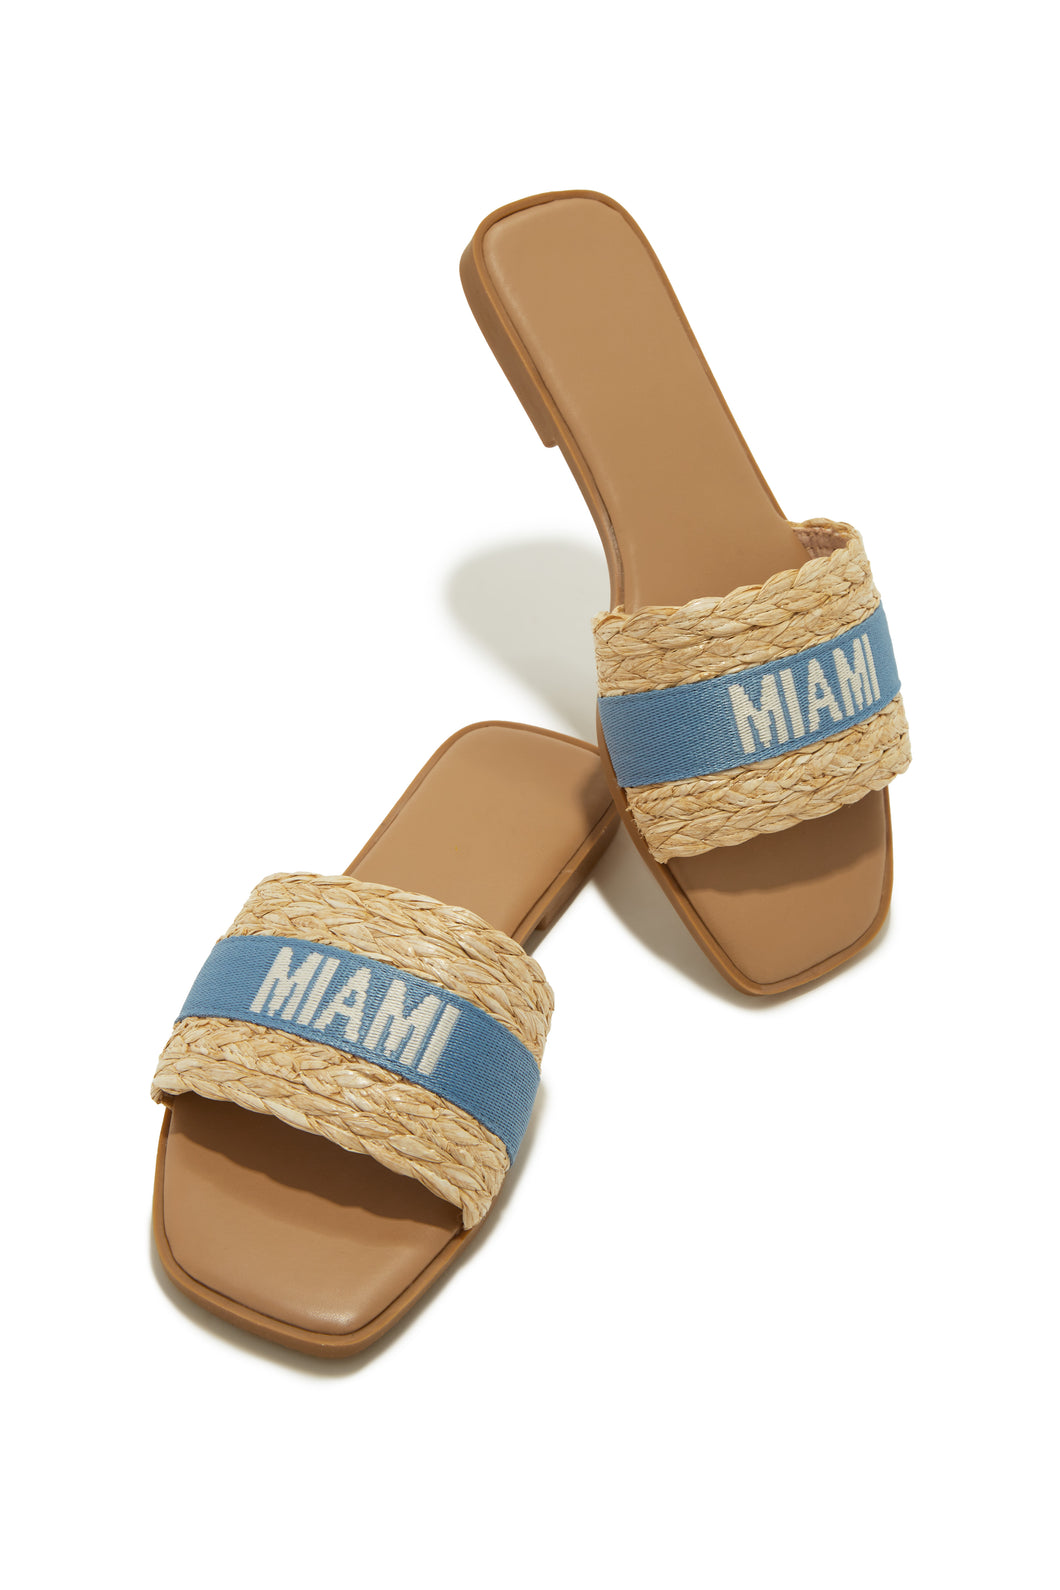 Miami Vacation Sandals 